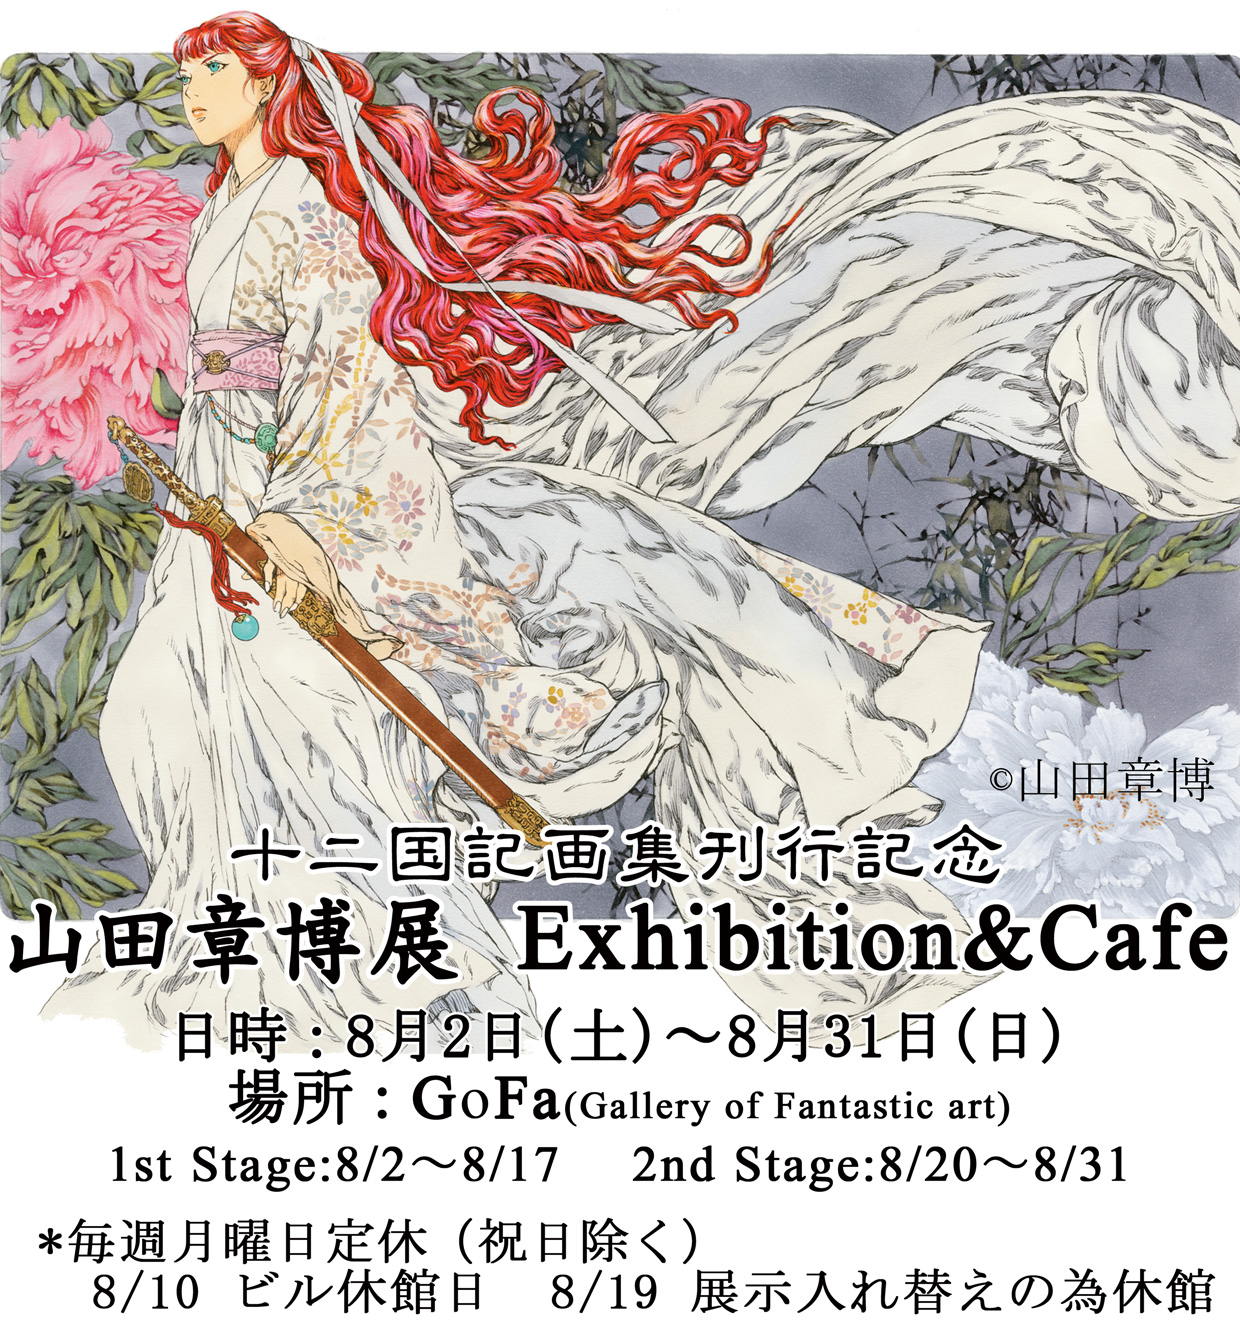 山田章博展 Exhibition & Cafe